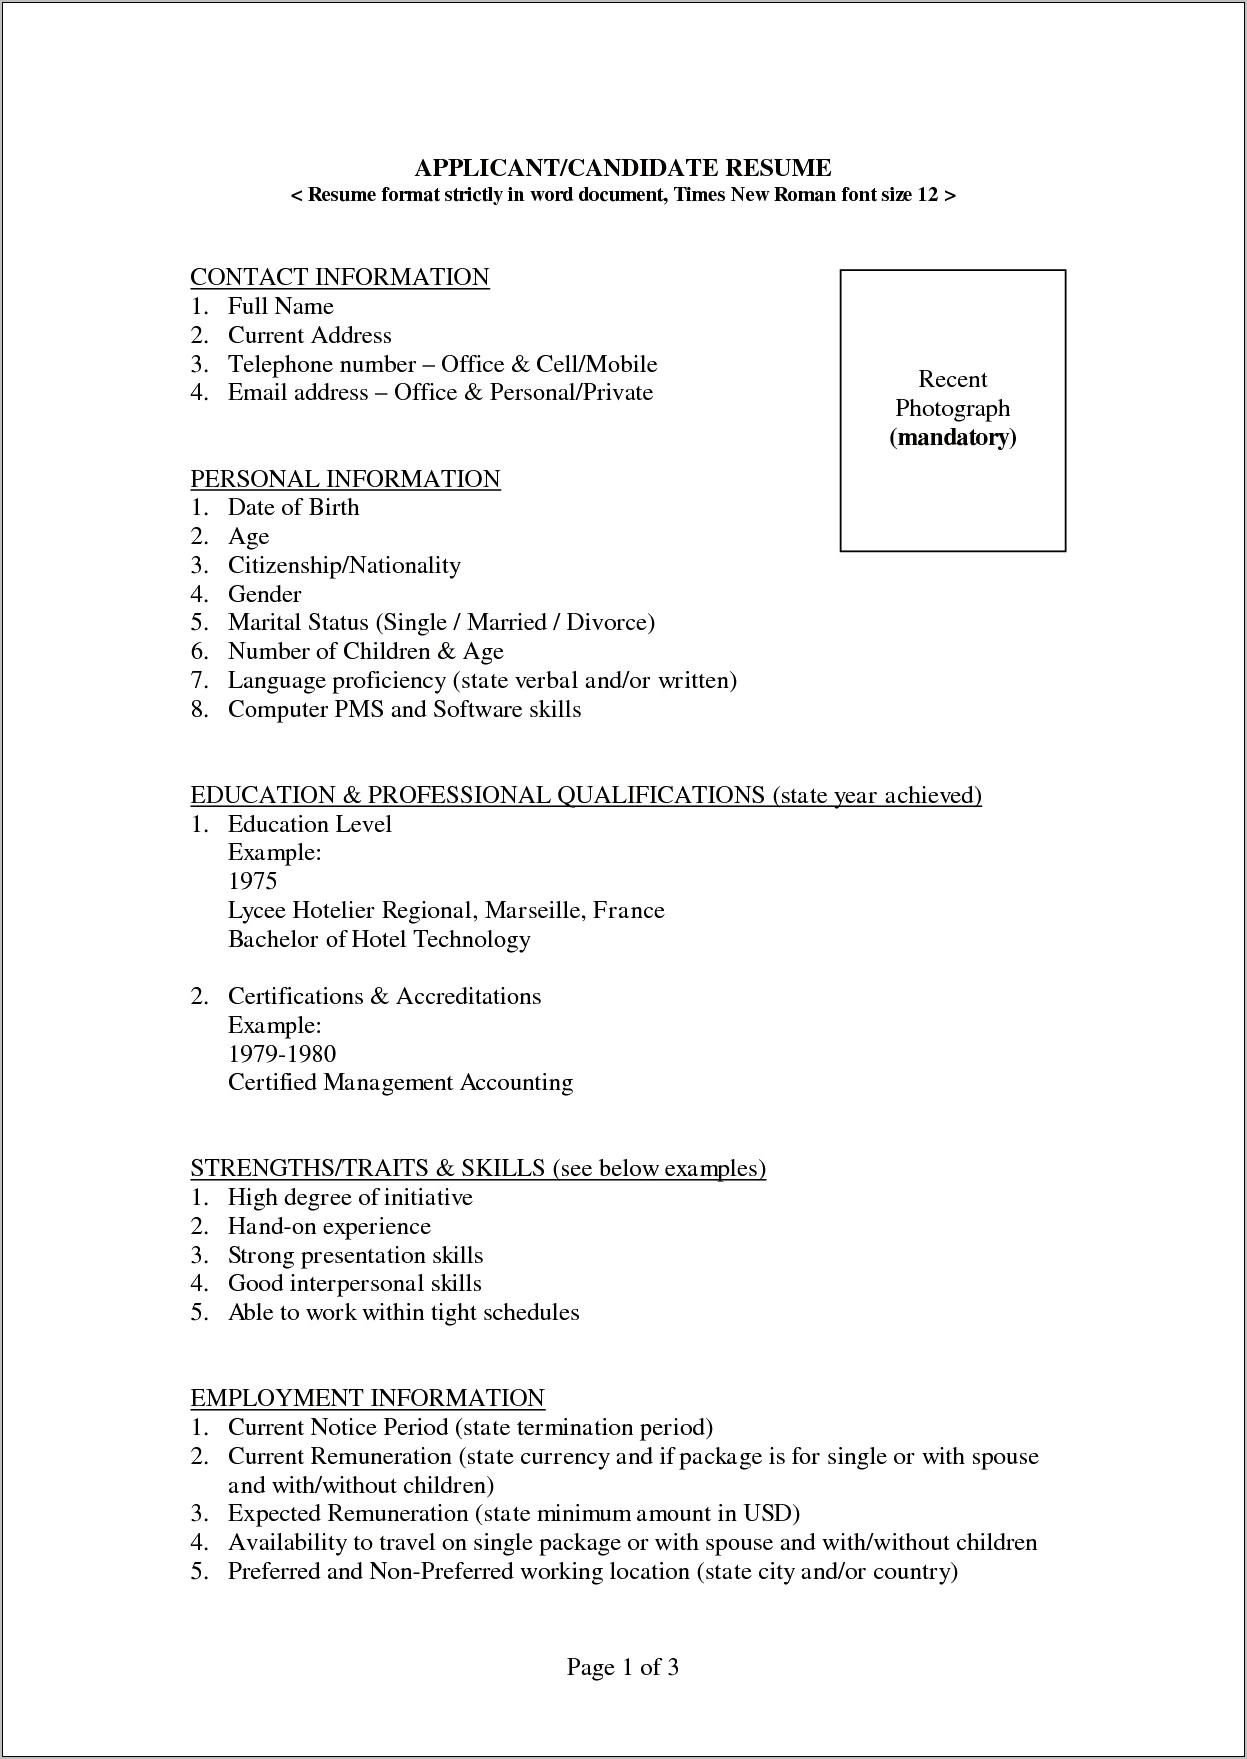 Resume Format In Word 2007 Download